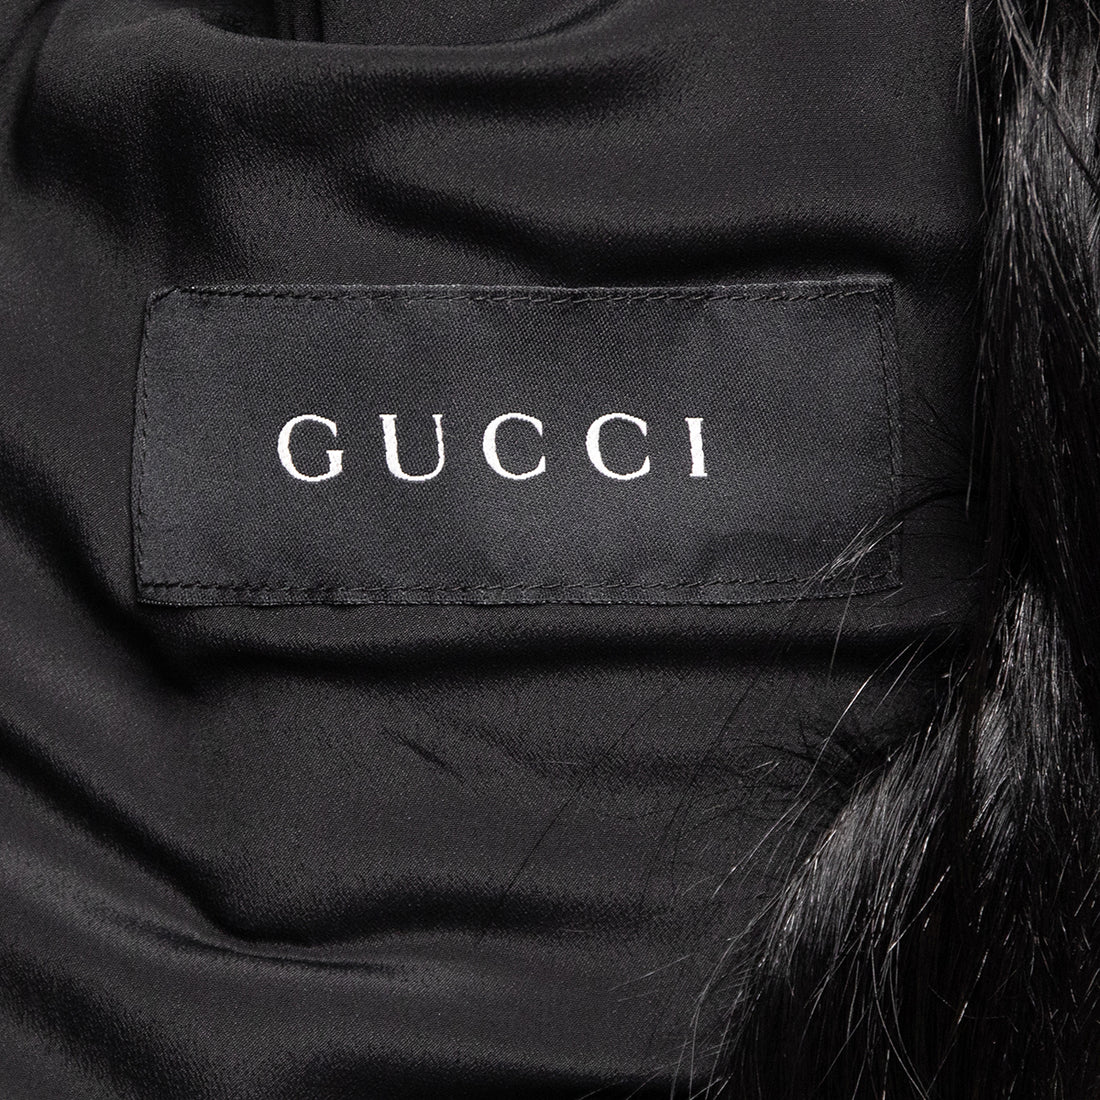 Gucci goatskin coat in oversize style